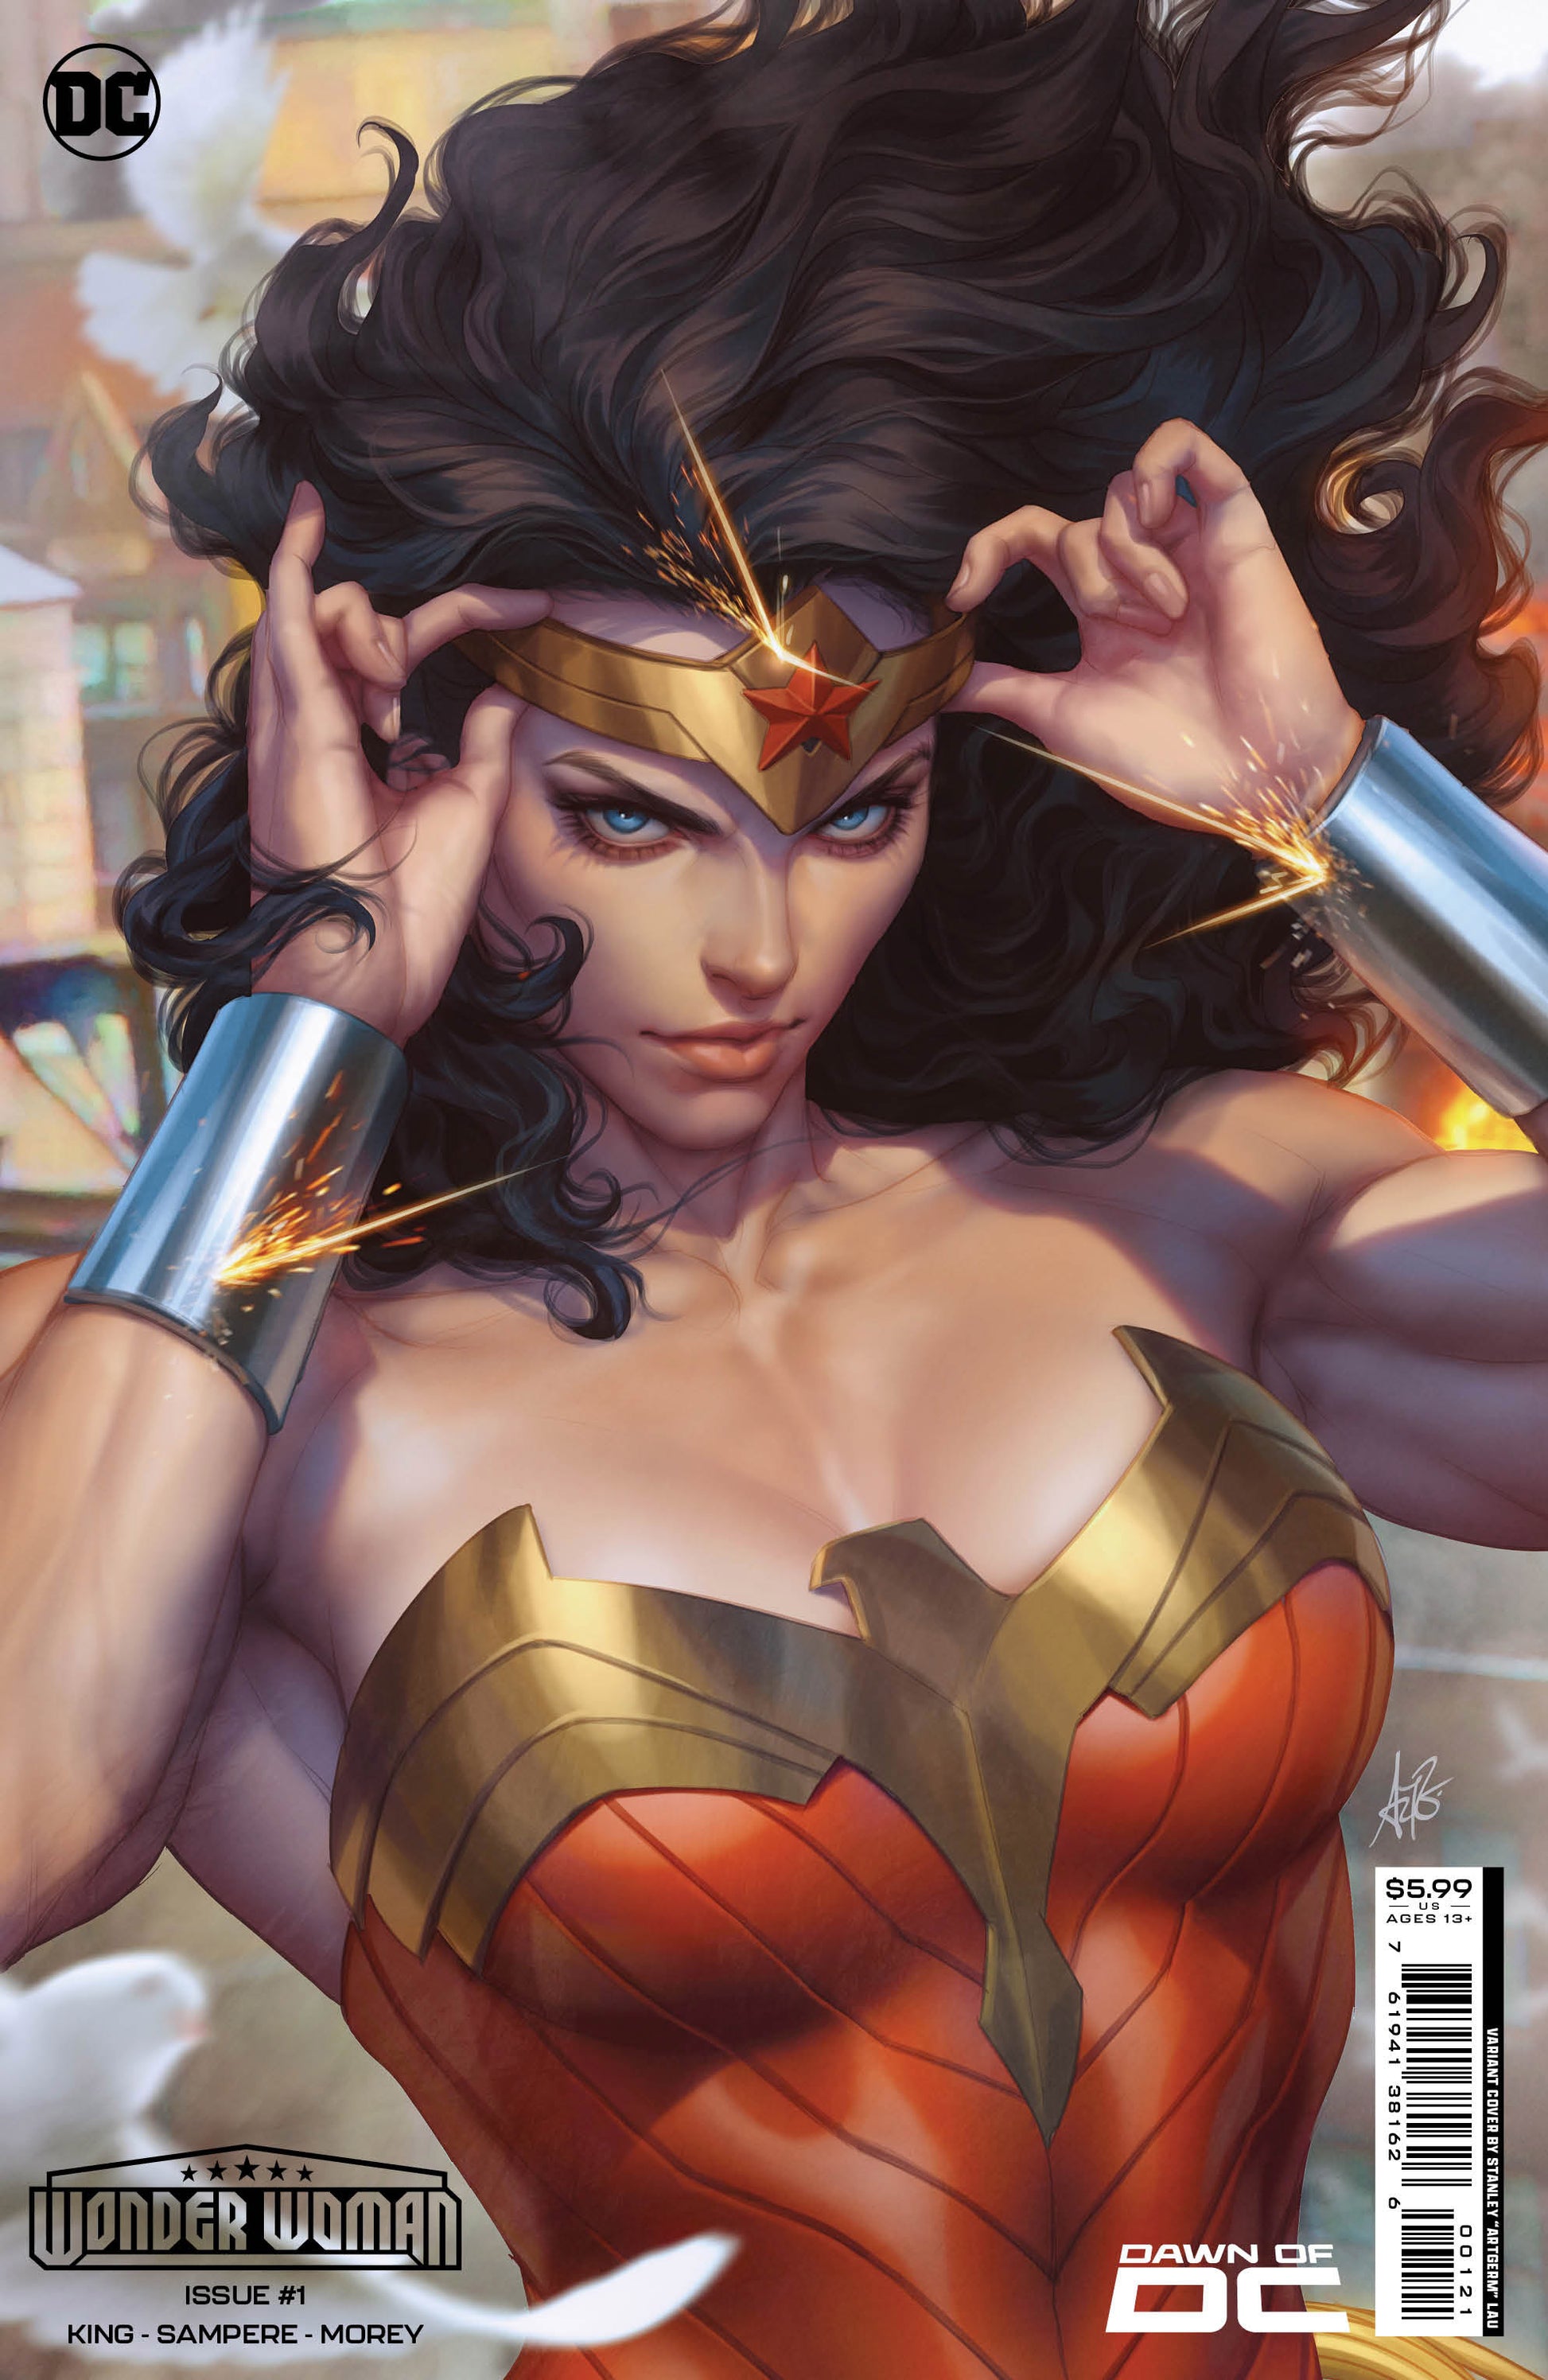 Wonder Woman: the feminist, Comics and graphic novels